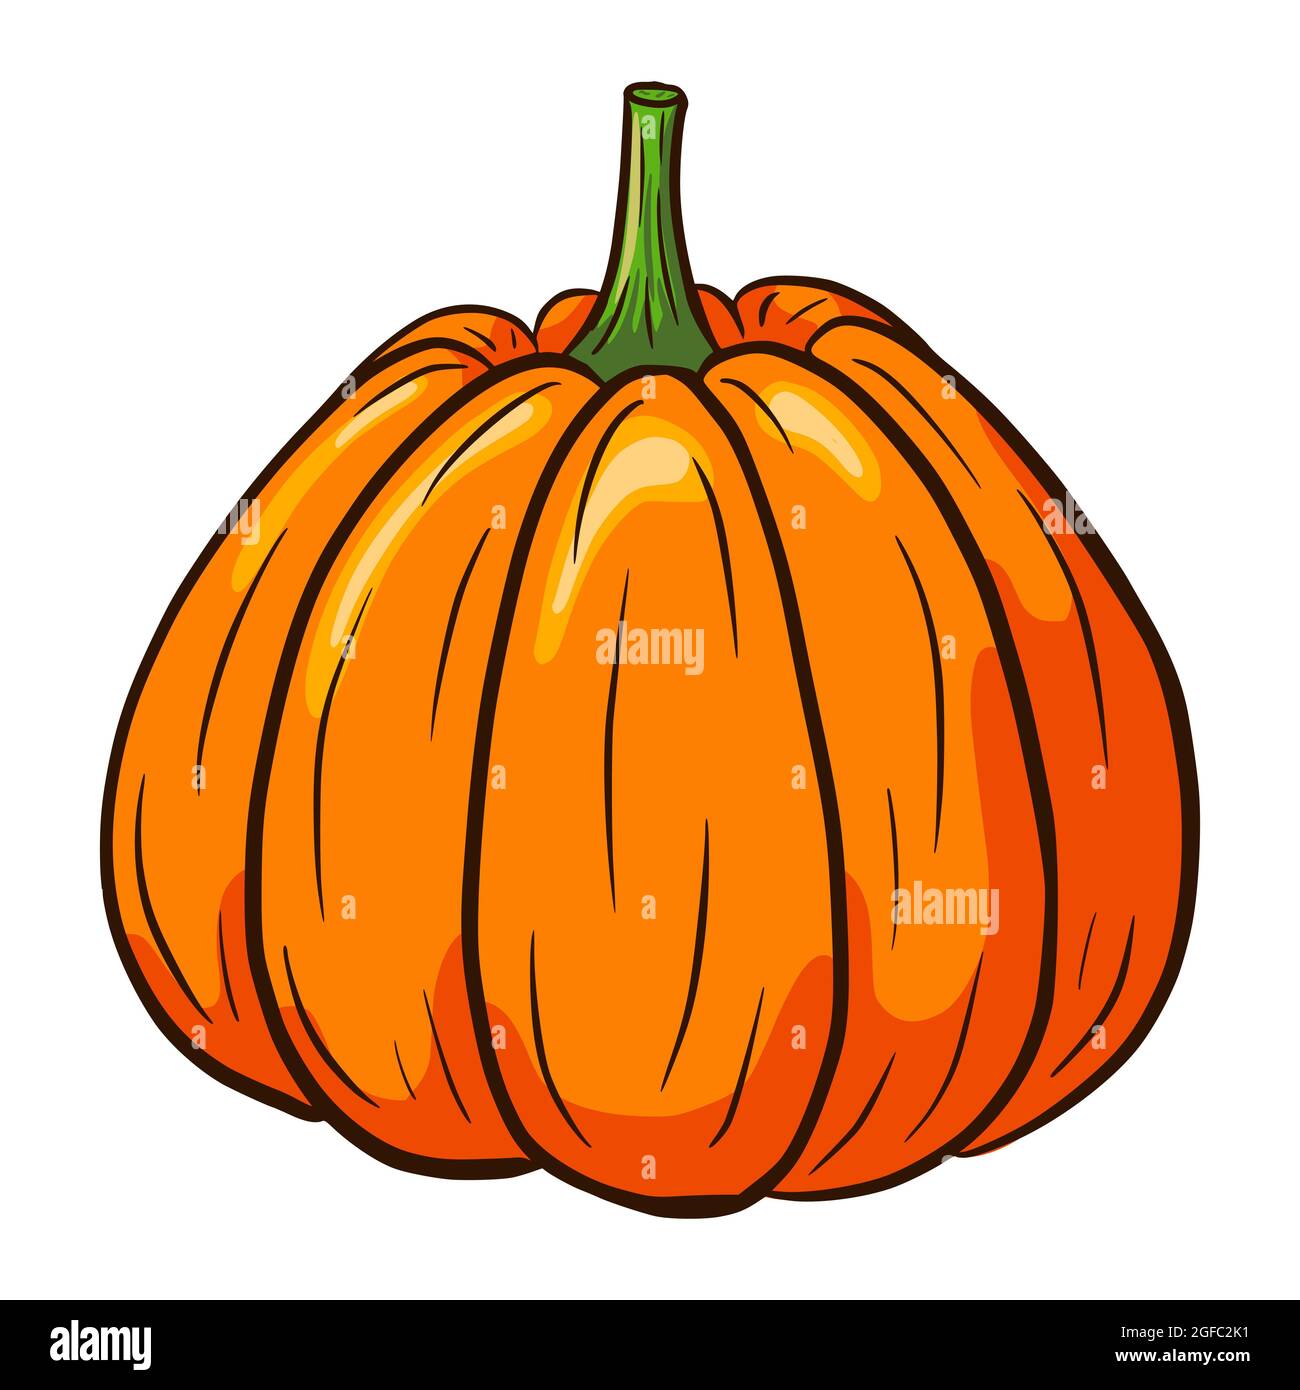 Cartoon Pumpkin Illustration. Autumn Food Icon. Ripe squash sketch. Element for autumn decorative design, halloween invitation, harvest, sticker, print, logo, menu, recipe Stock Vector